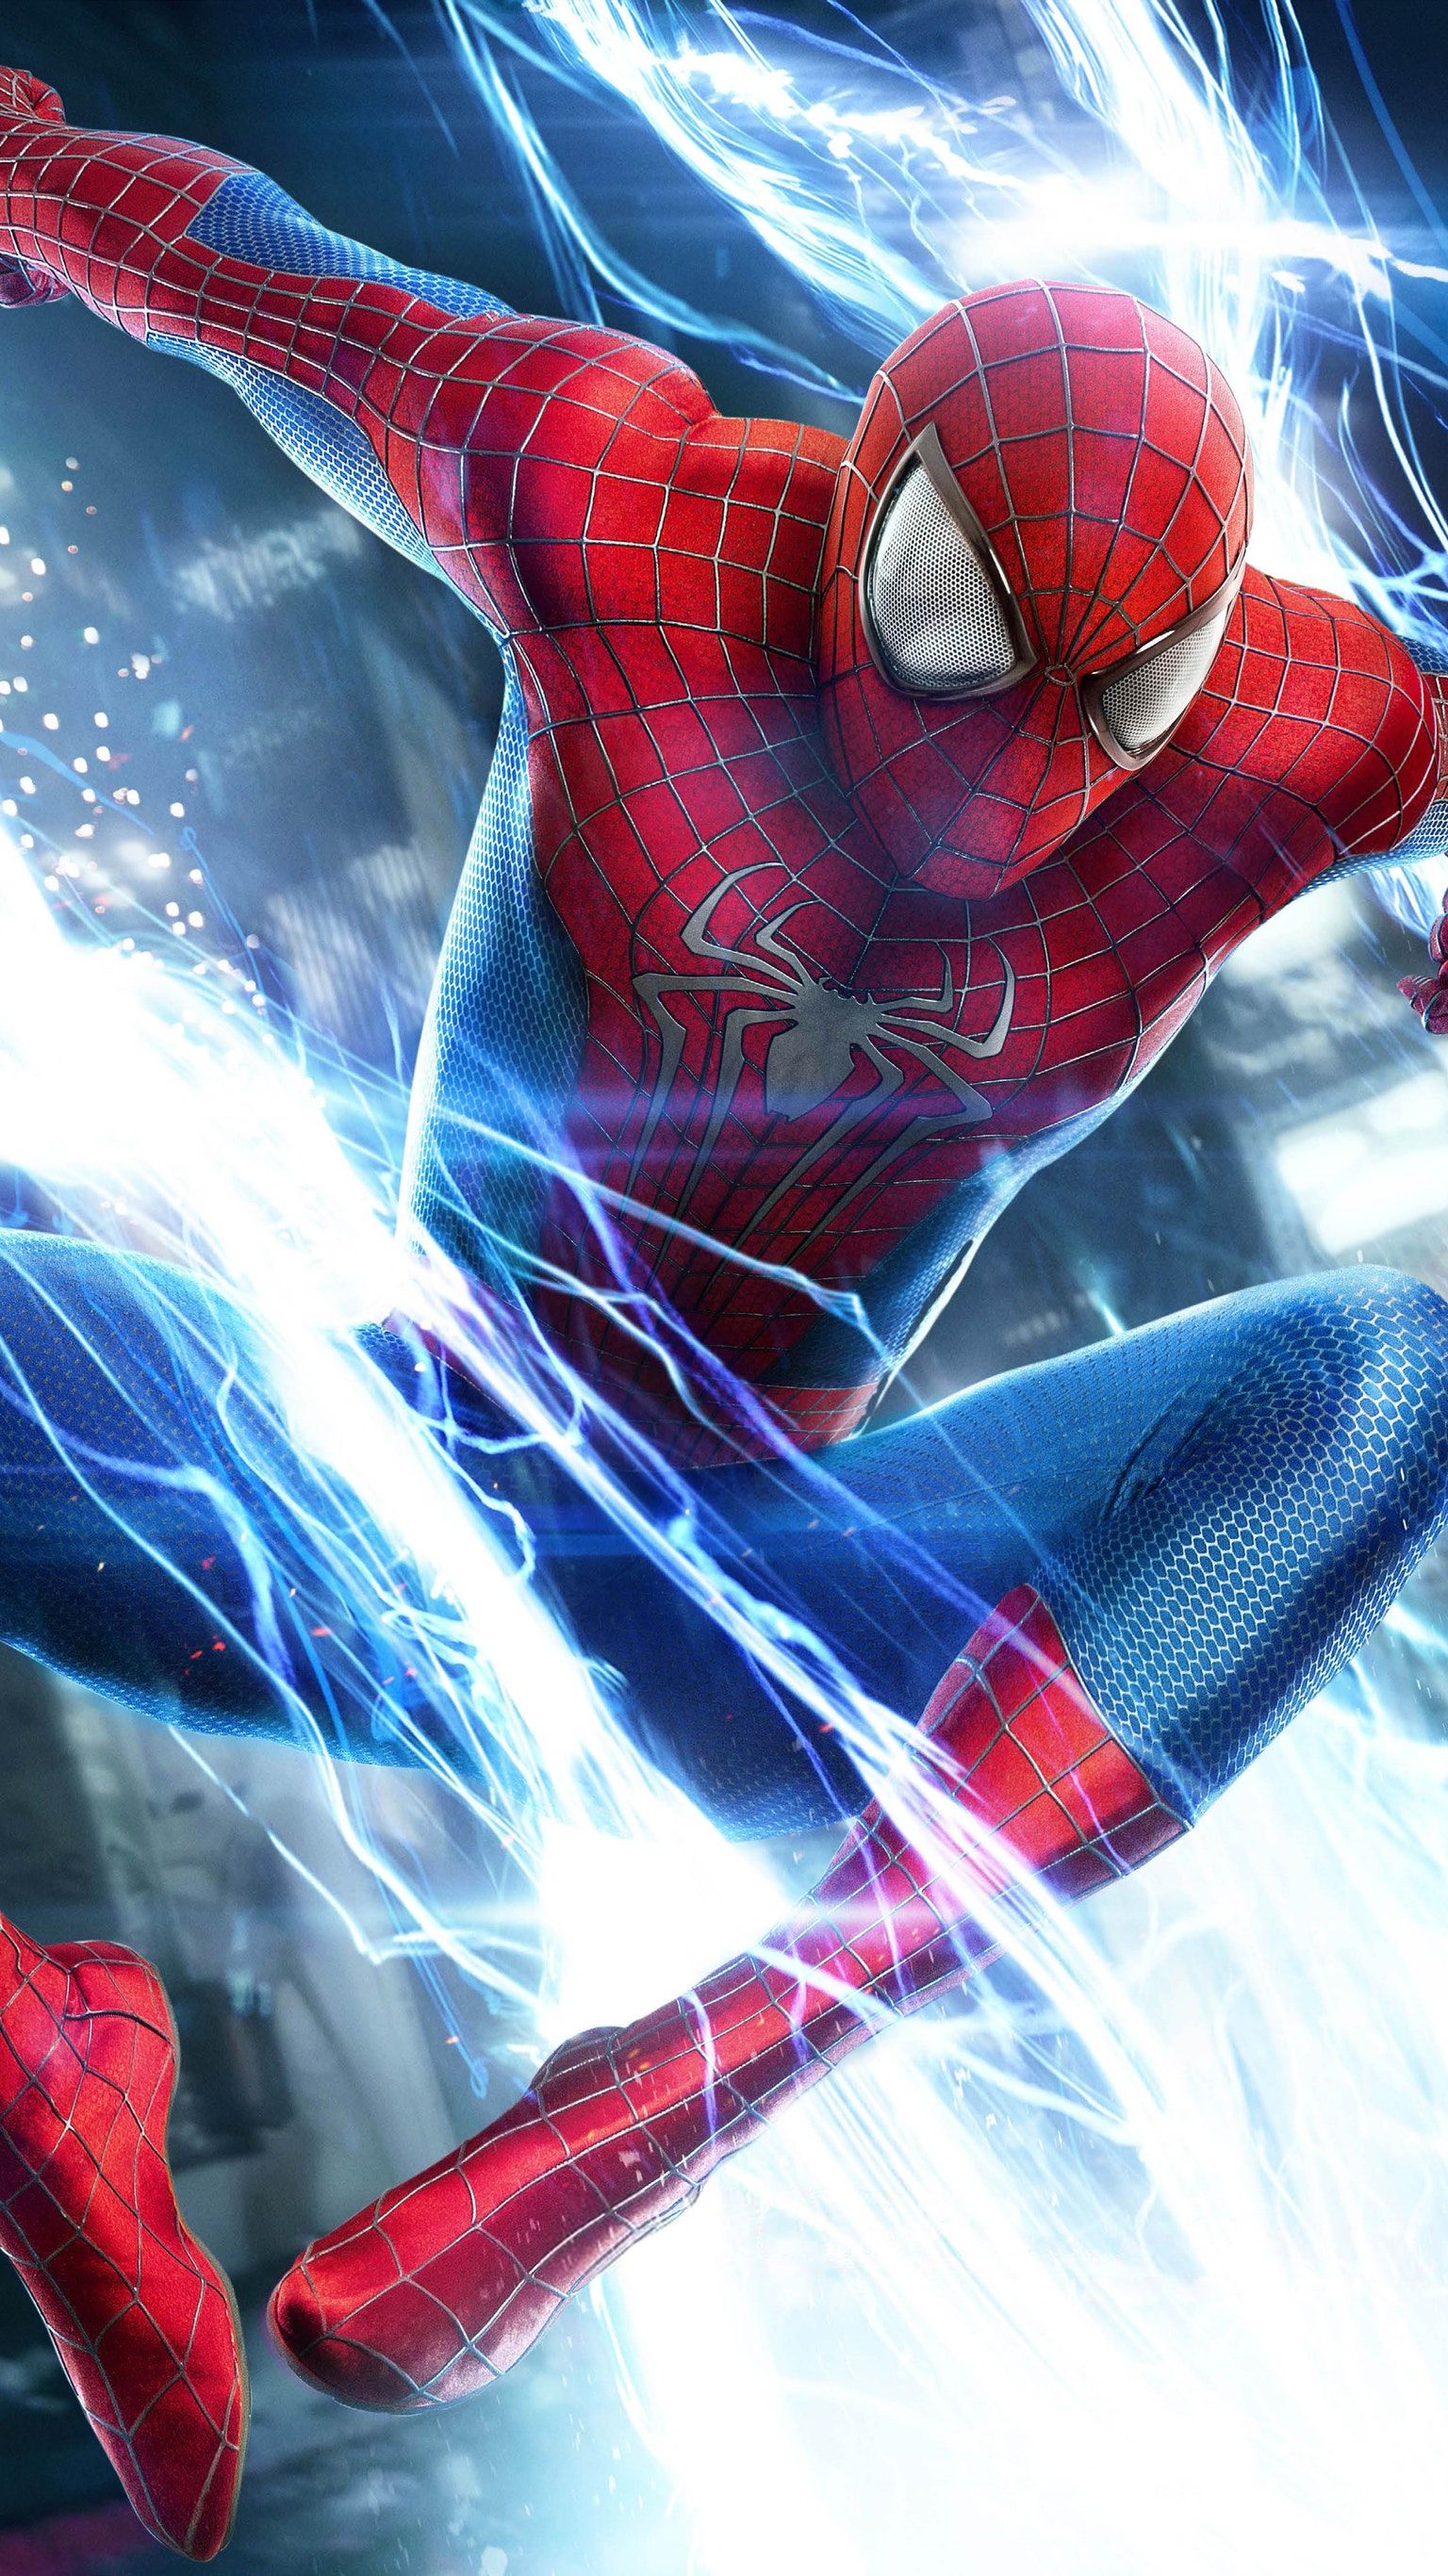 örümcek adam wallpaper,spider man,superhero,fictional character,hero,cg artwork